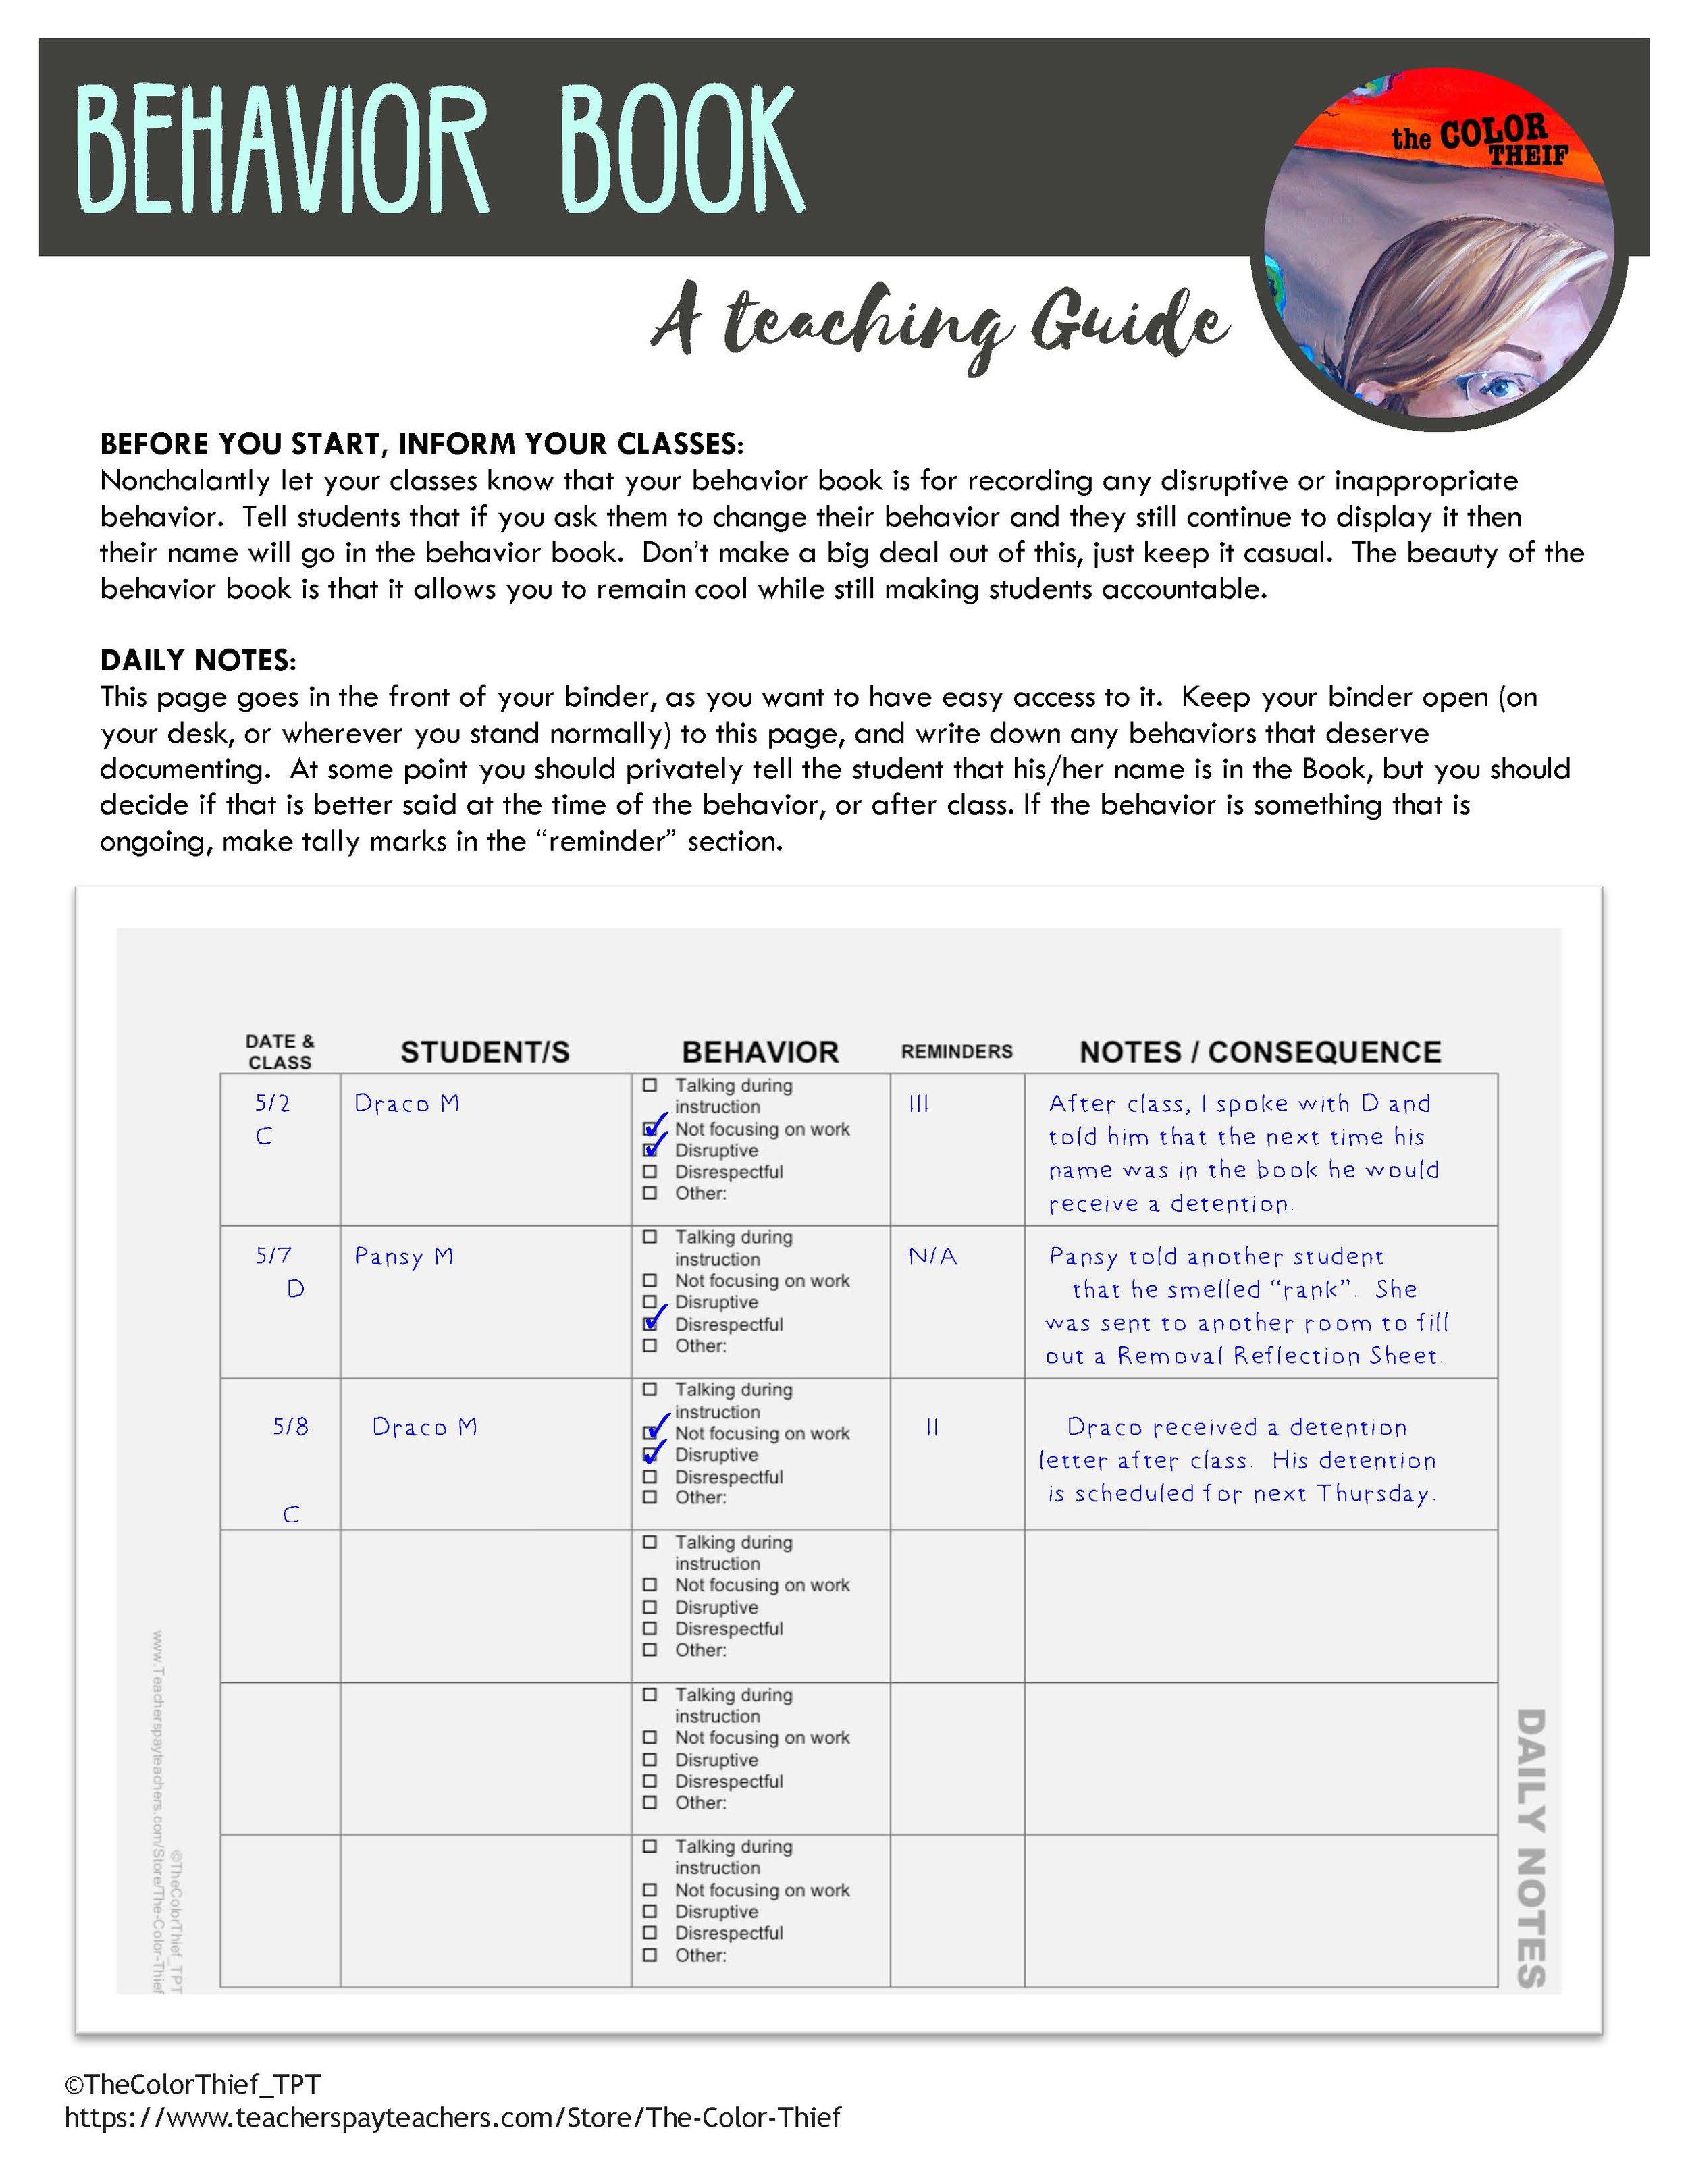 Behavior Book Teaching Guide 1_Page_2.jpg